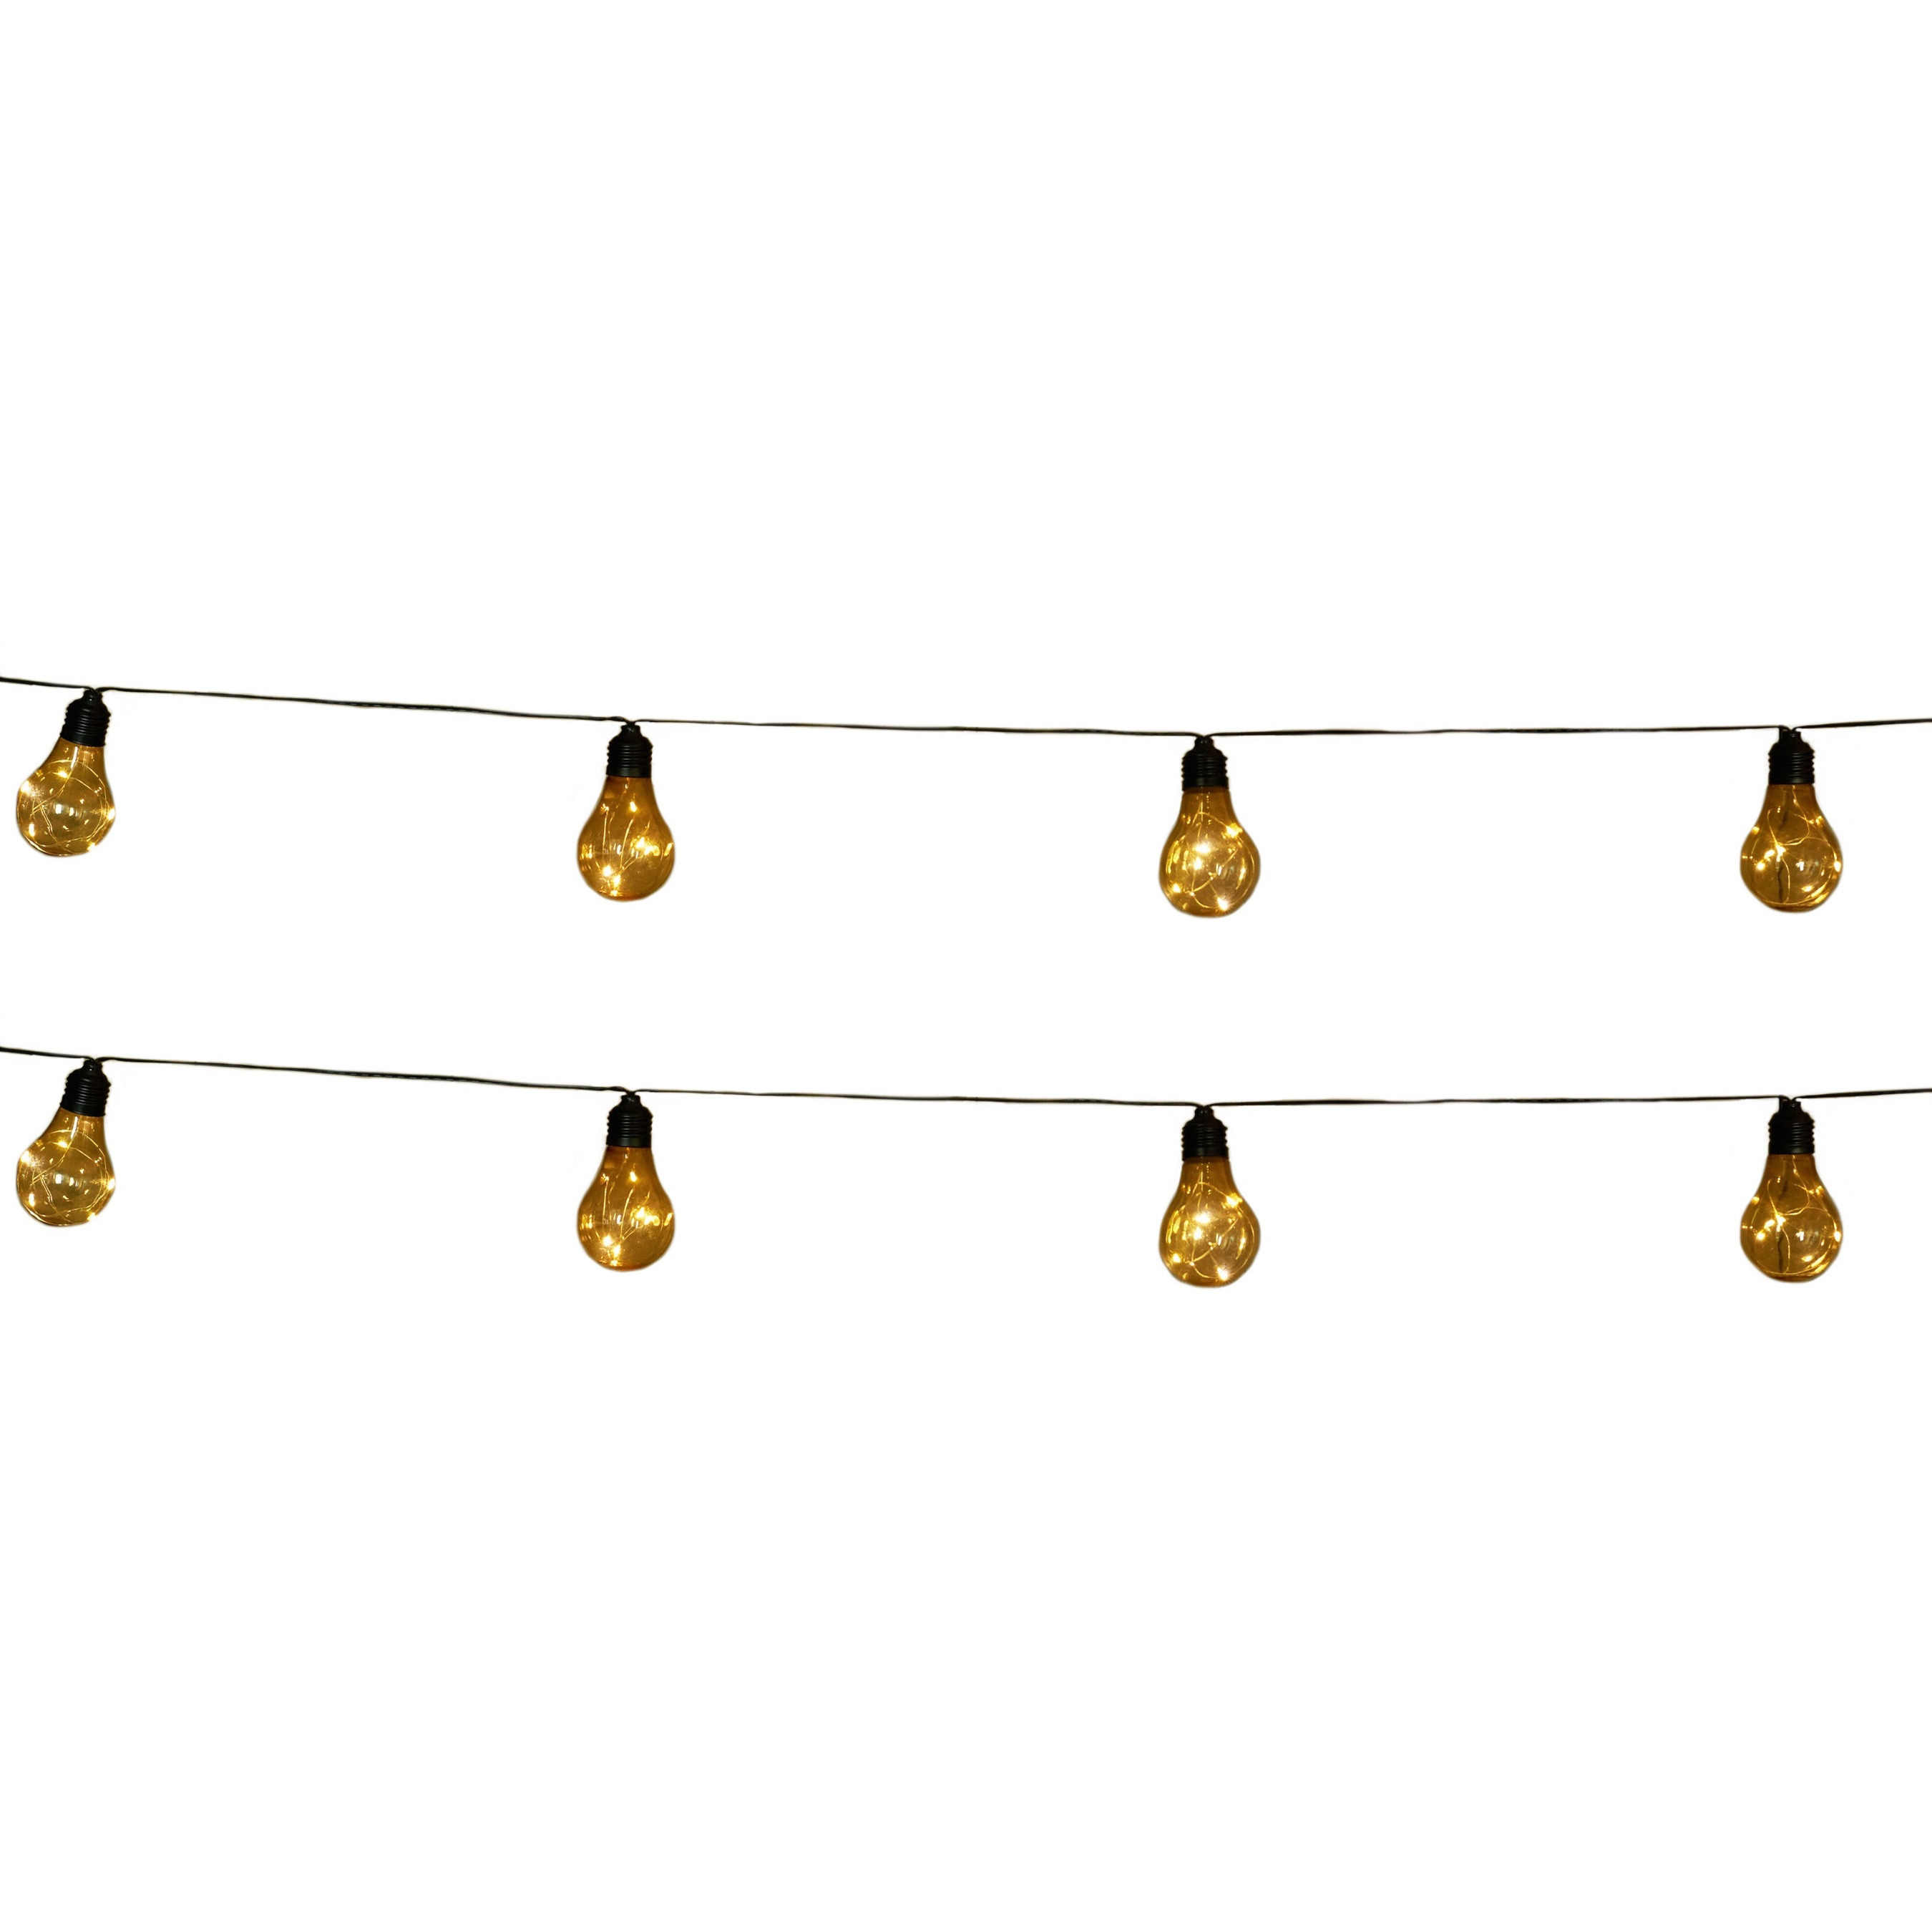 2x stuks solar tuinverlichting lichtsnoeren met lampjes-bollampjes warm wit 450 cm